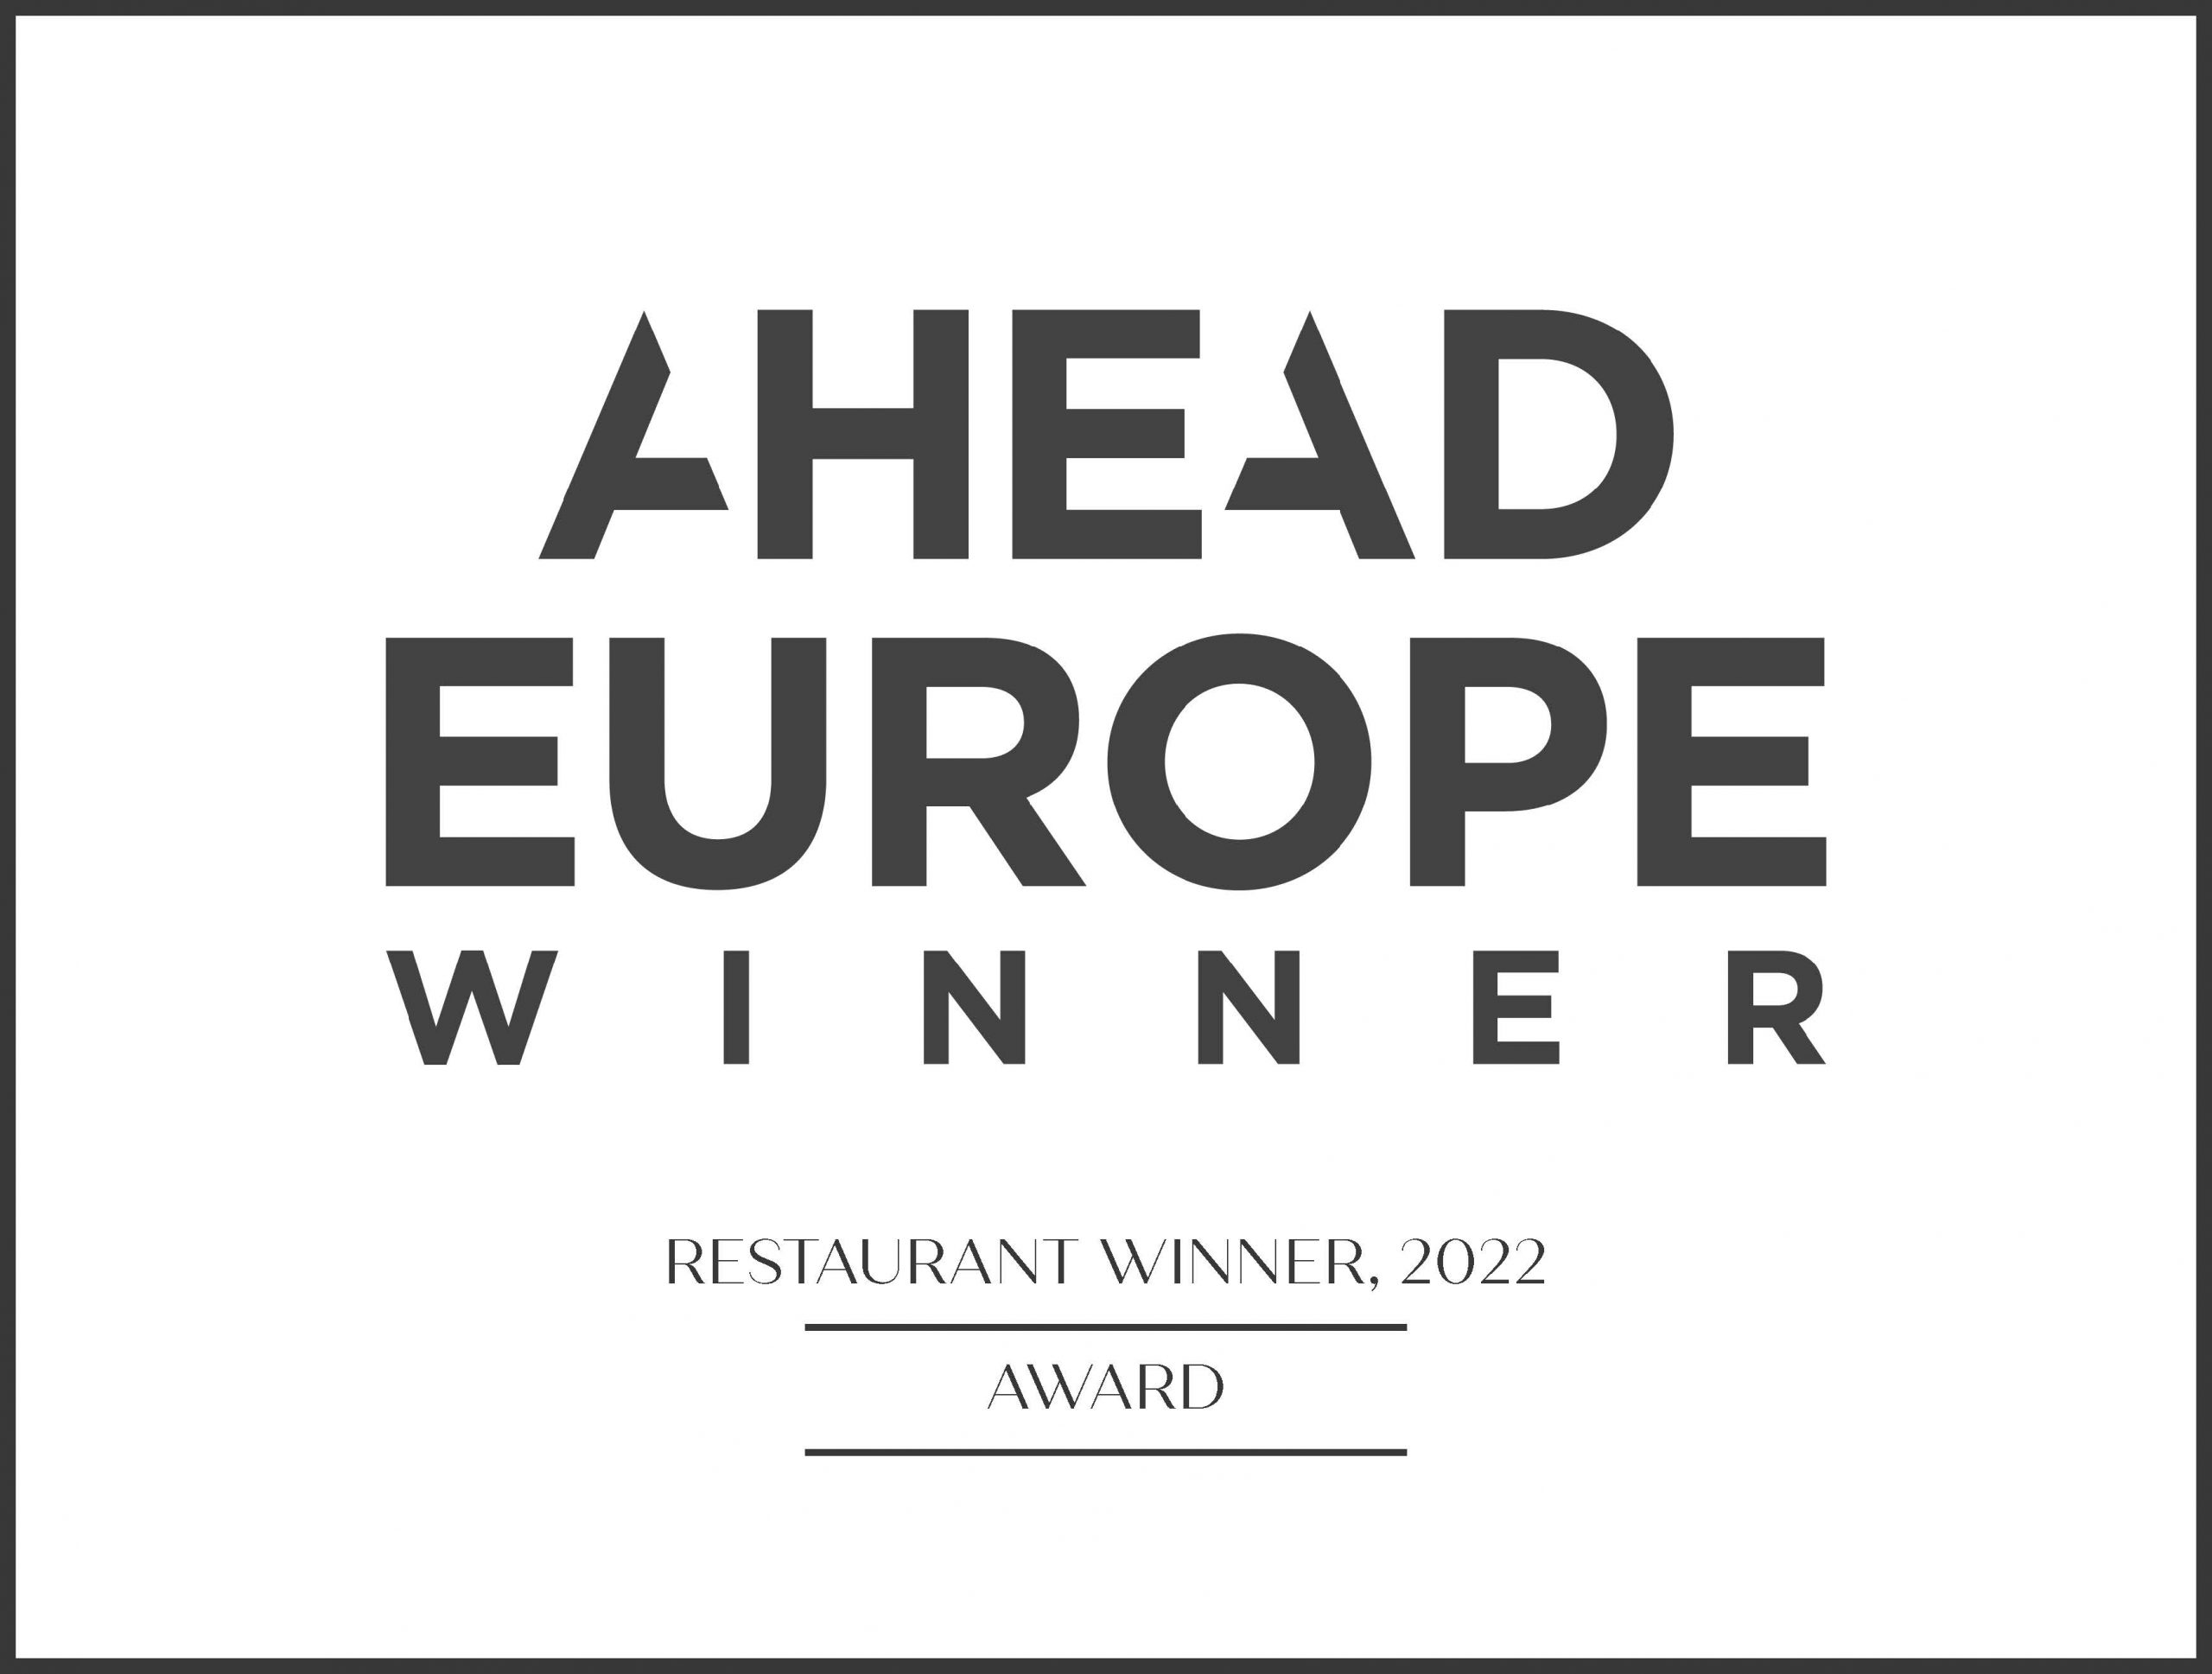 Ahead Europe Restaurant Winner 2022